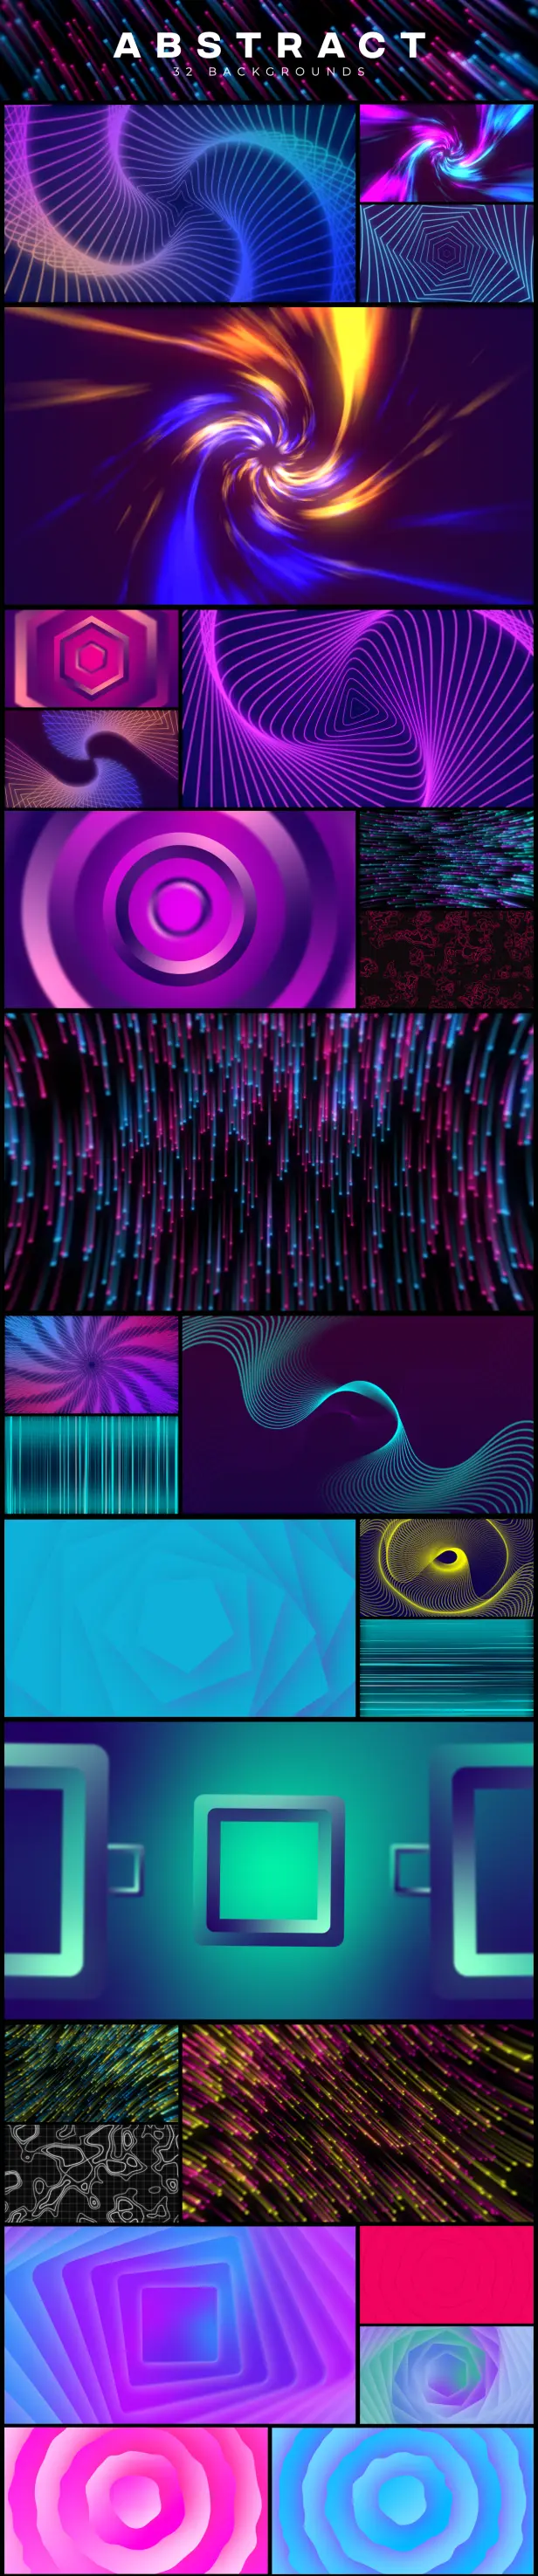 AE脚本|300+种抽象霓虹灯,粒子,背景图案循环动画素材-iBG Loop Backgrounds